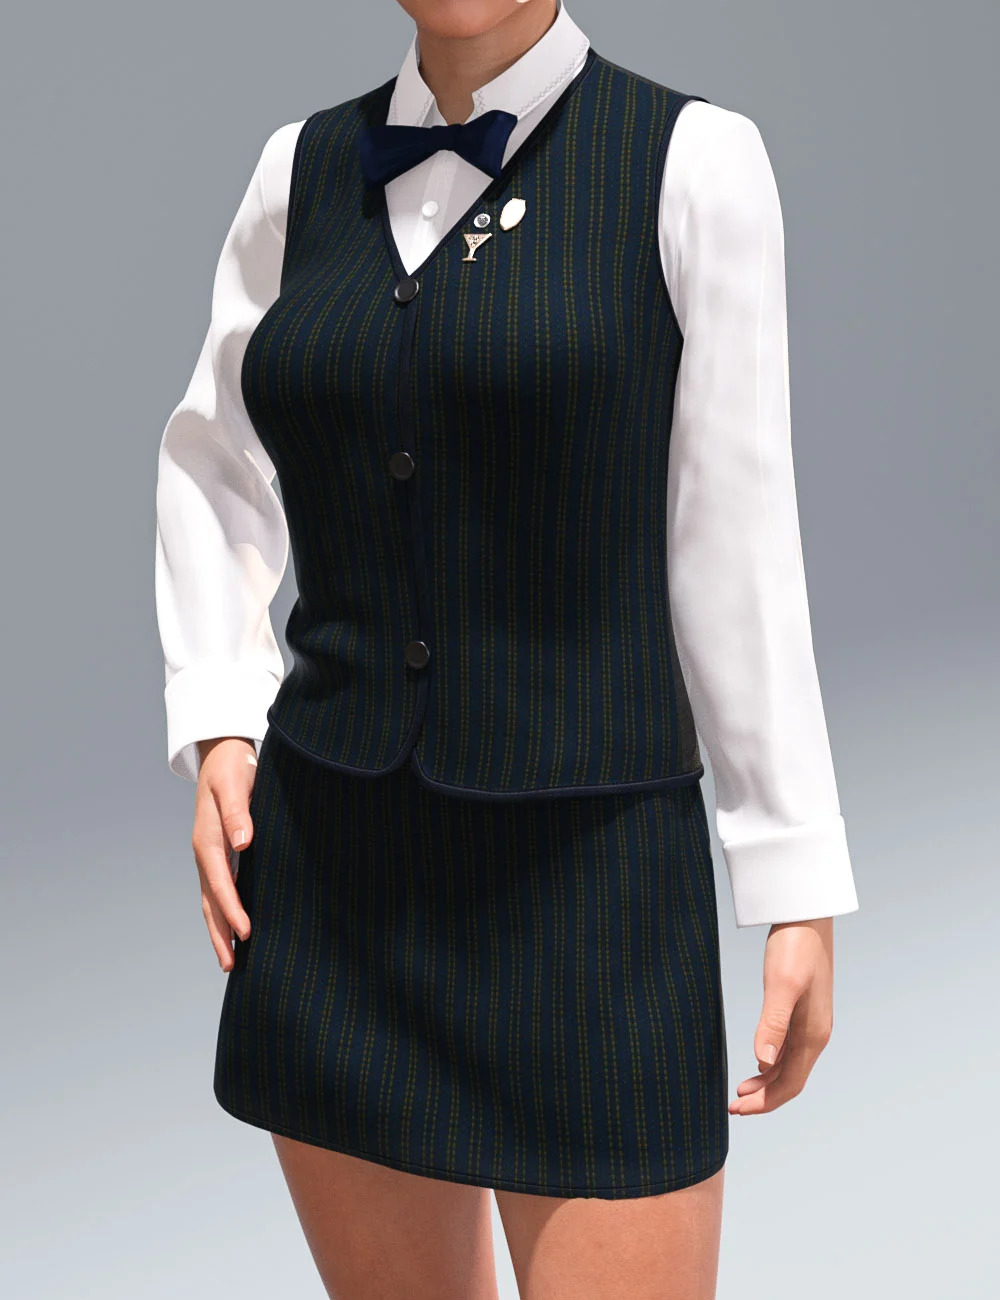 dForce Bartender Outfit for Genesis 8 Females